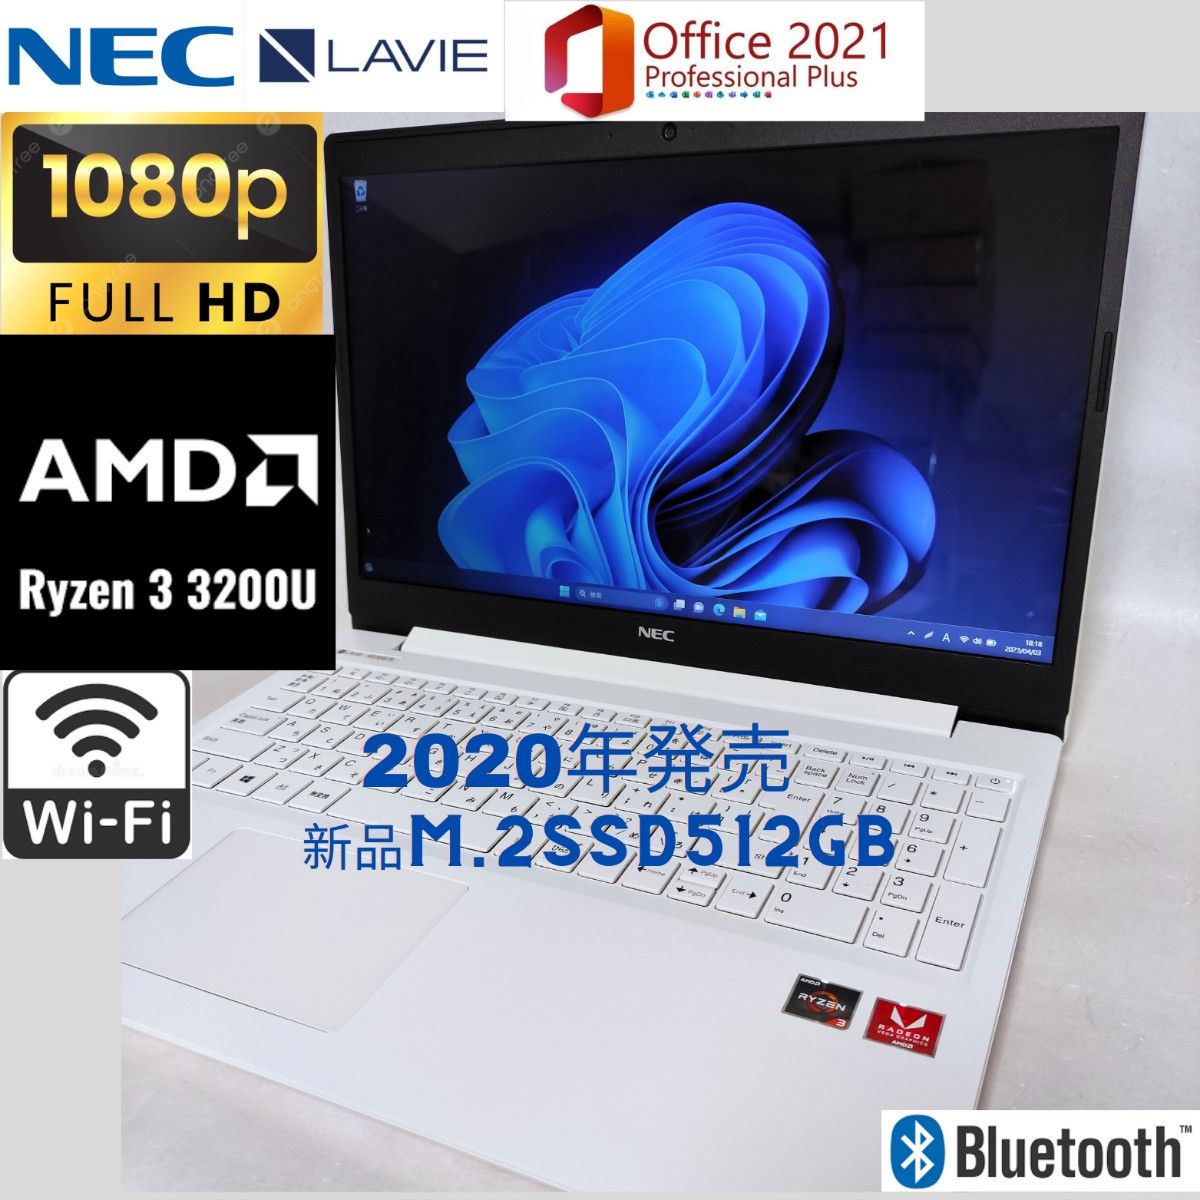 NEC LAVIE NS300/R Ryzen 3 3200U 2020年発売 FullHD 中古パソコン